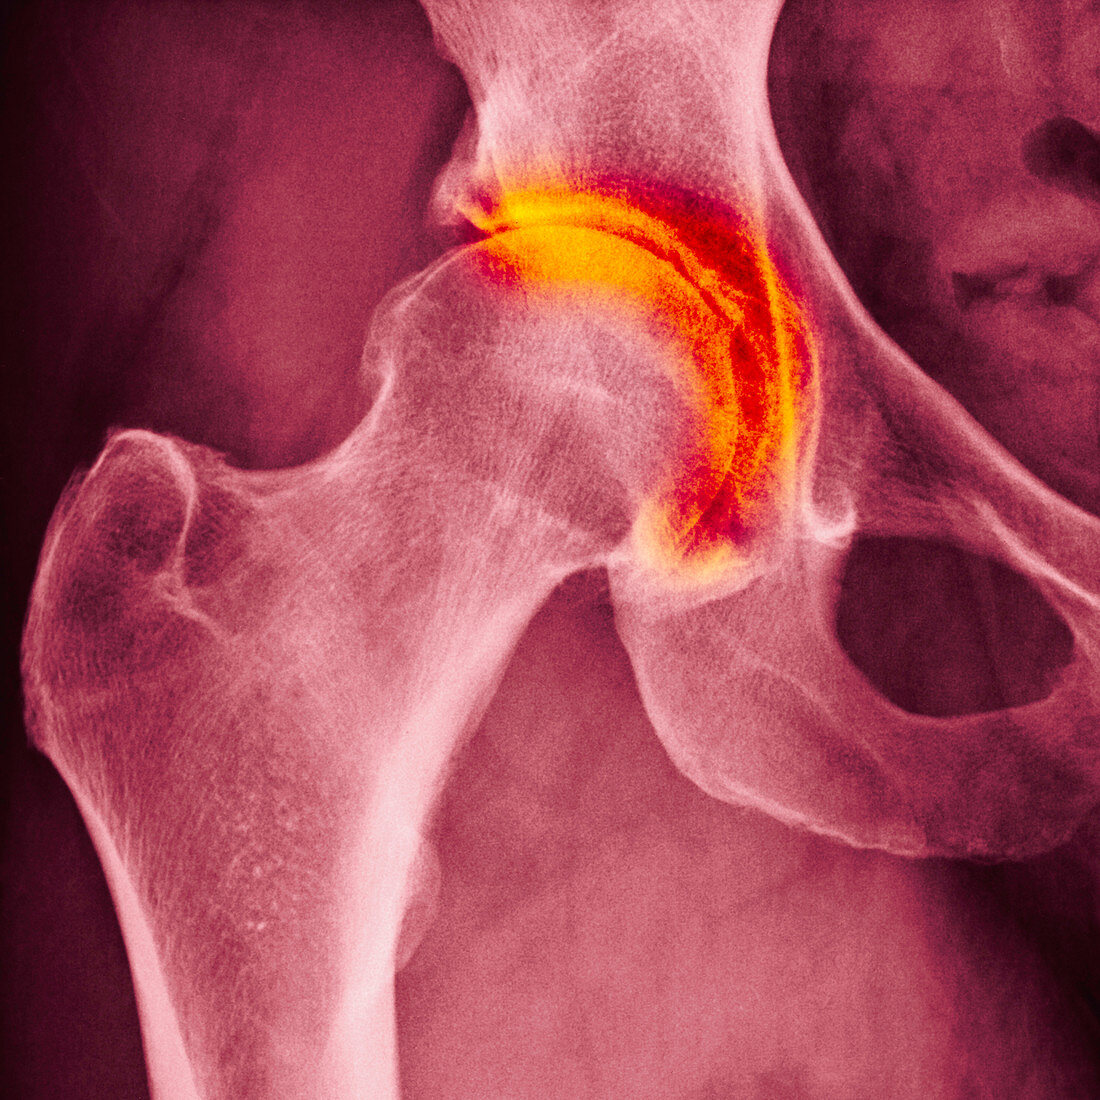 Hip arthritis, X-ray